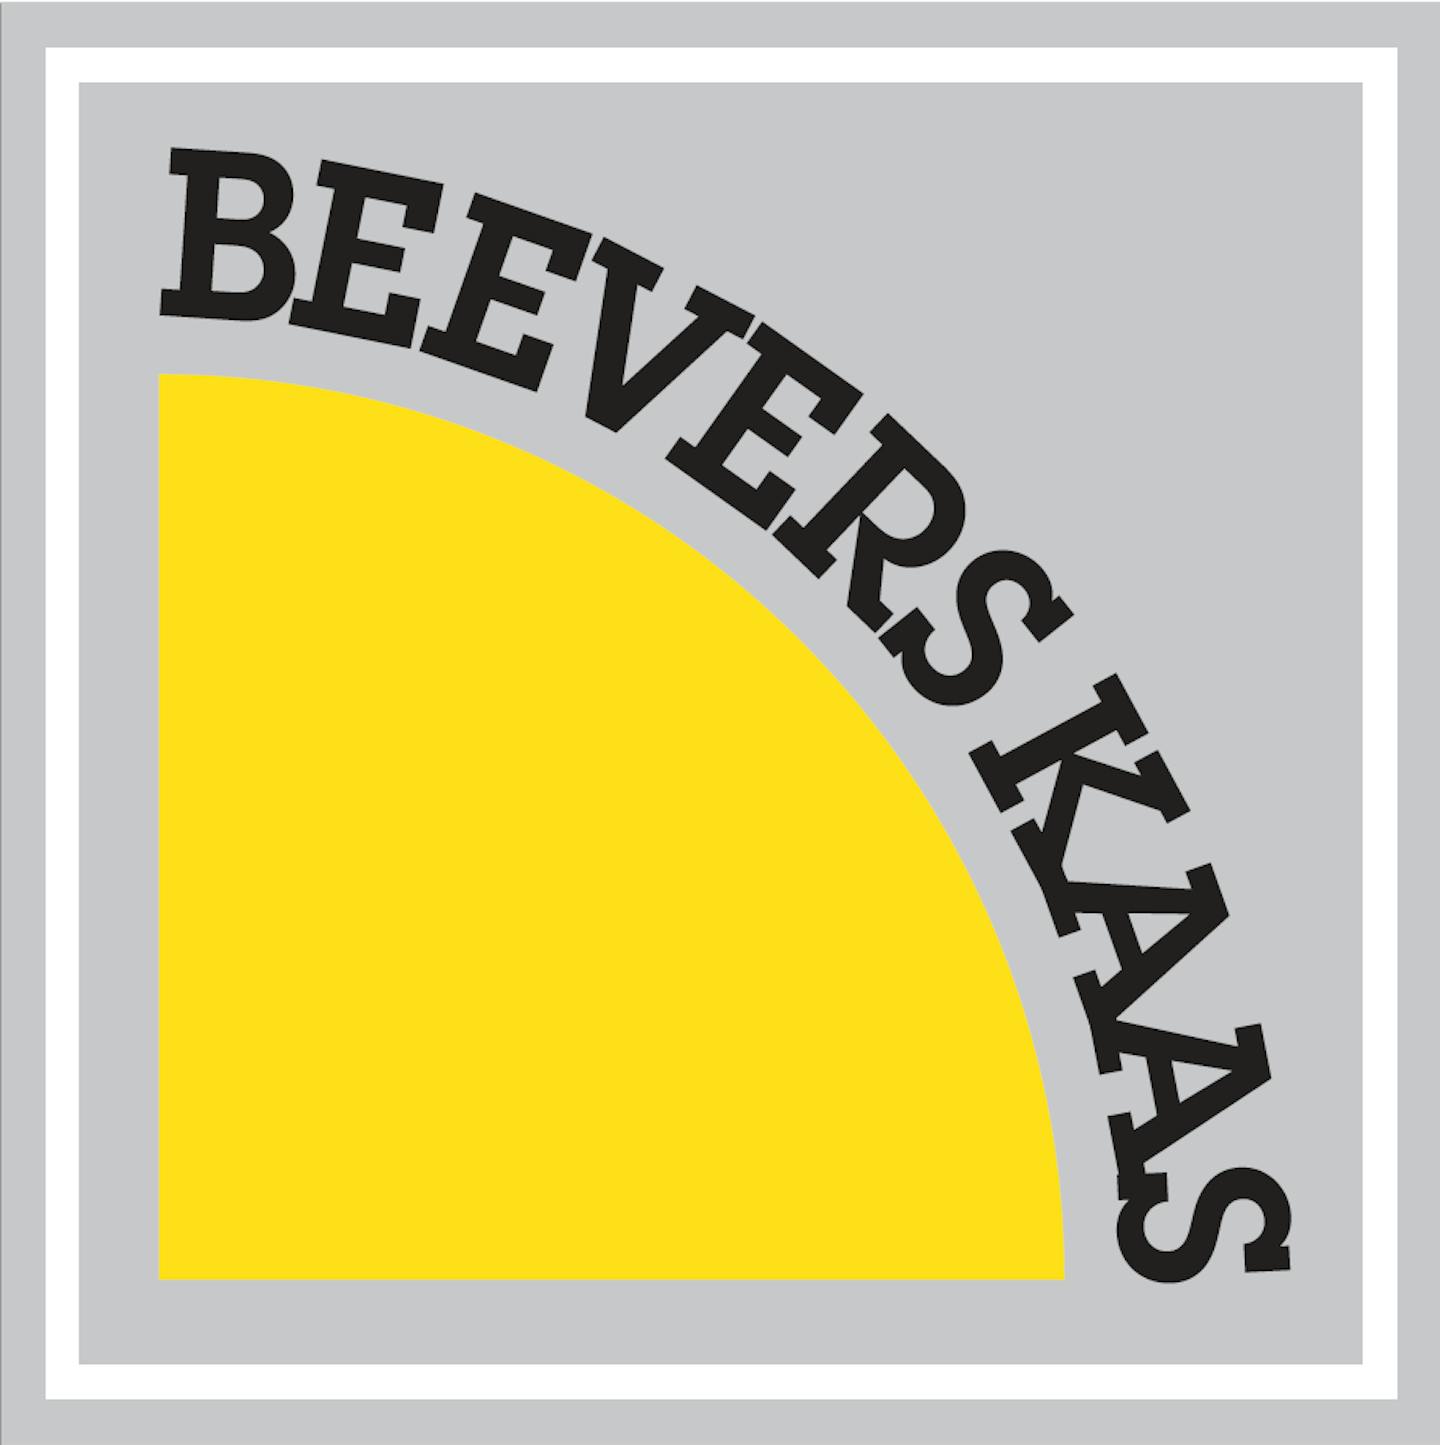 Beevers kaas logo